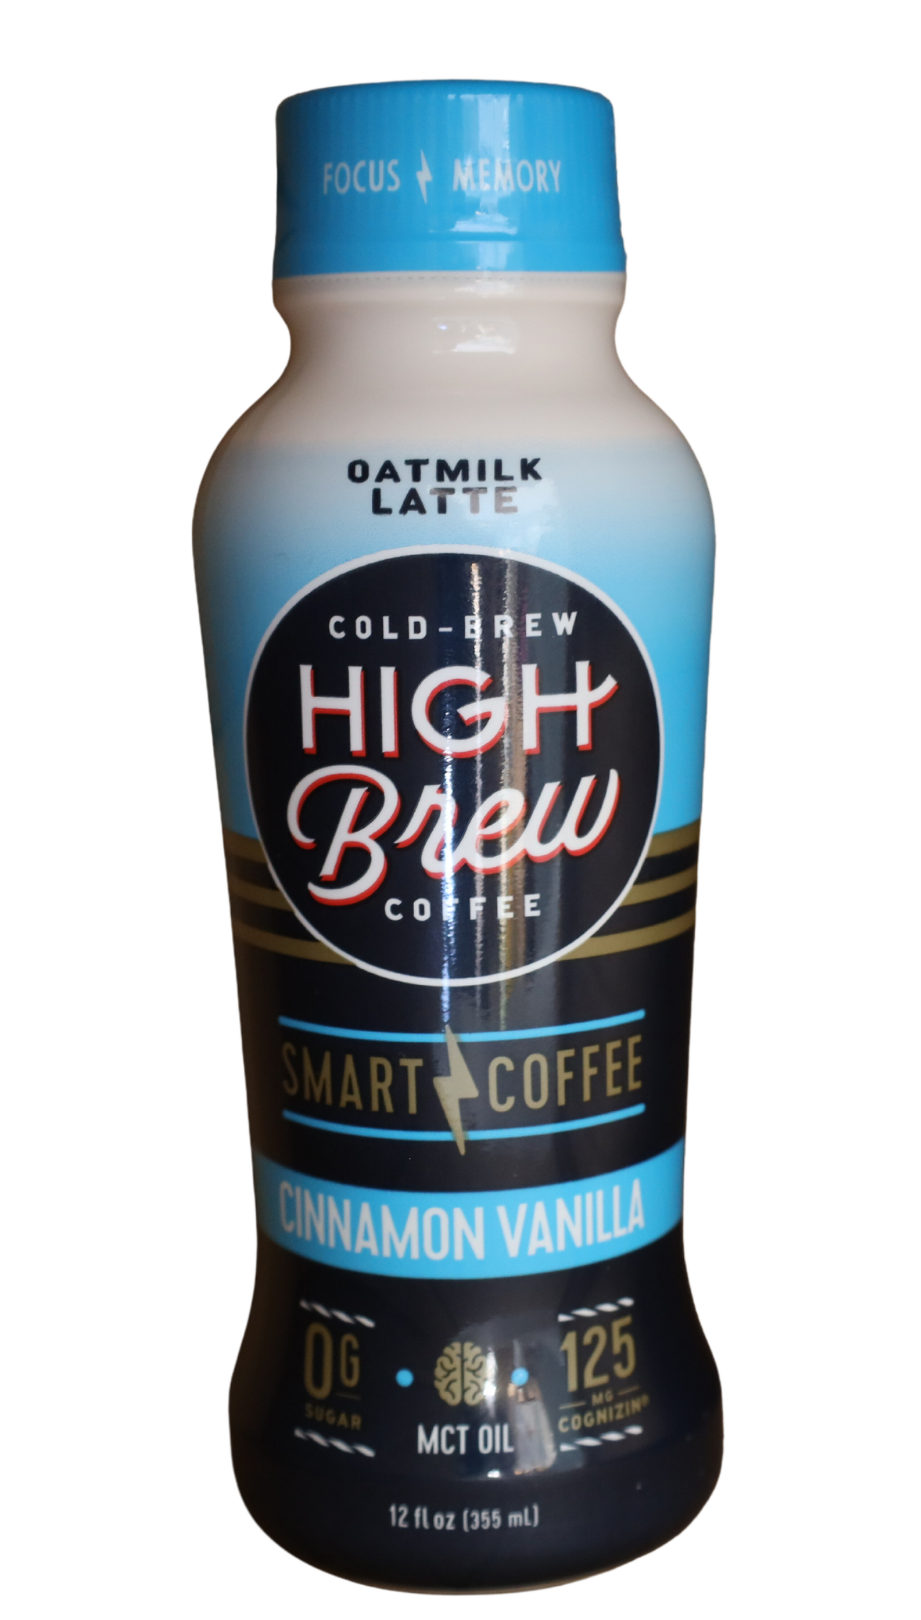 Cinnamon Vanilla Smart Coffee